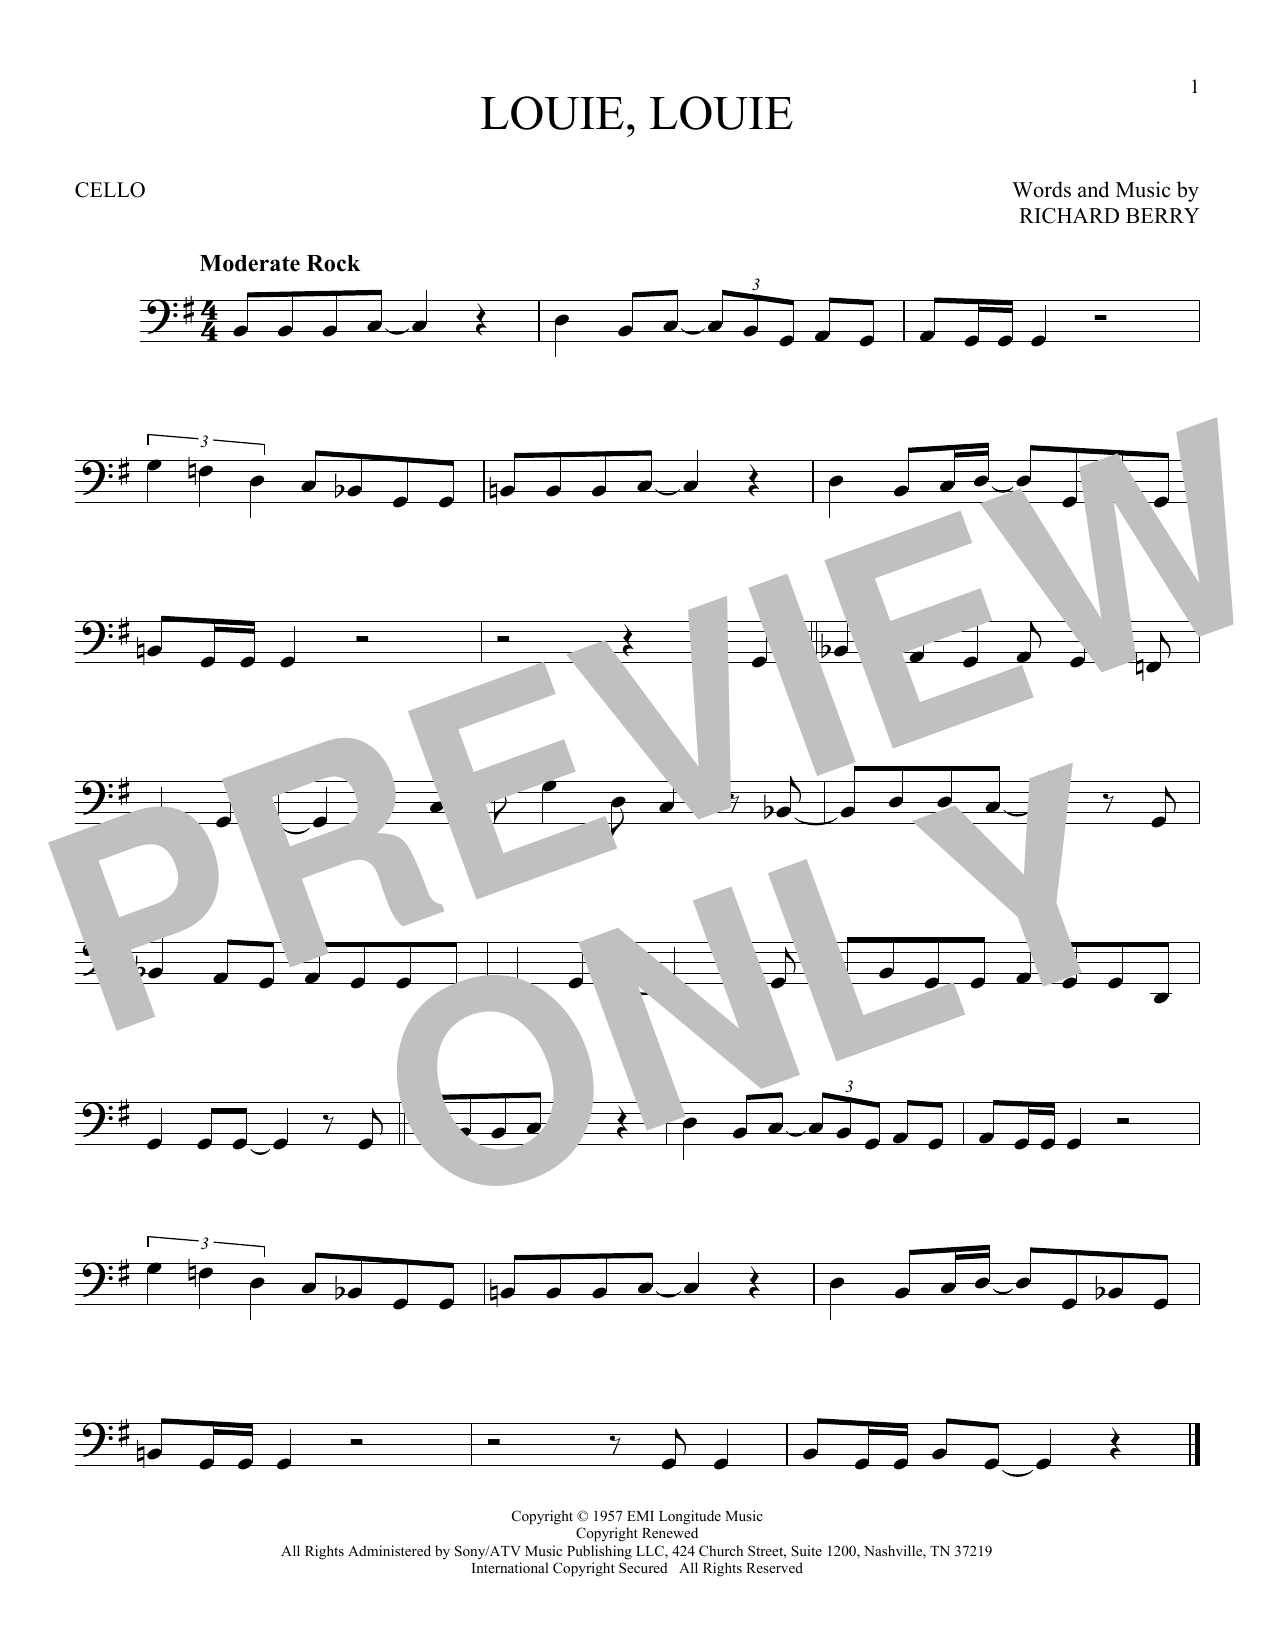 Kingsmen Louie, Louie Sheet Music Notes & Chords for Guitar Lead Sheet - Download or Print PDF